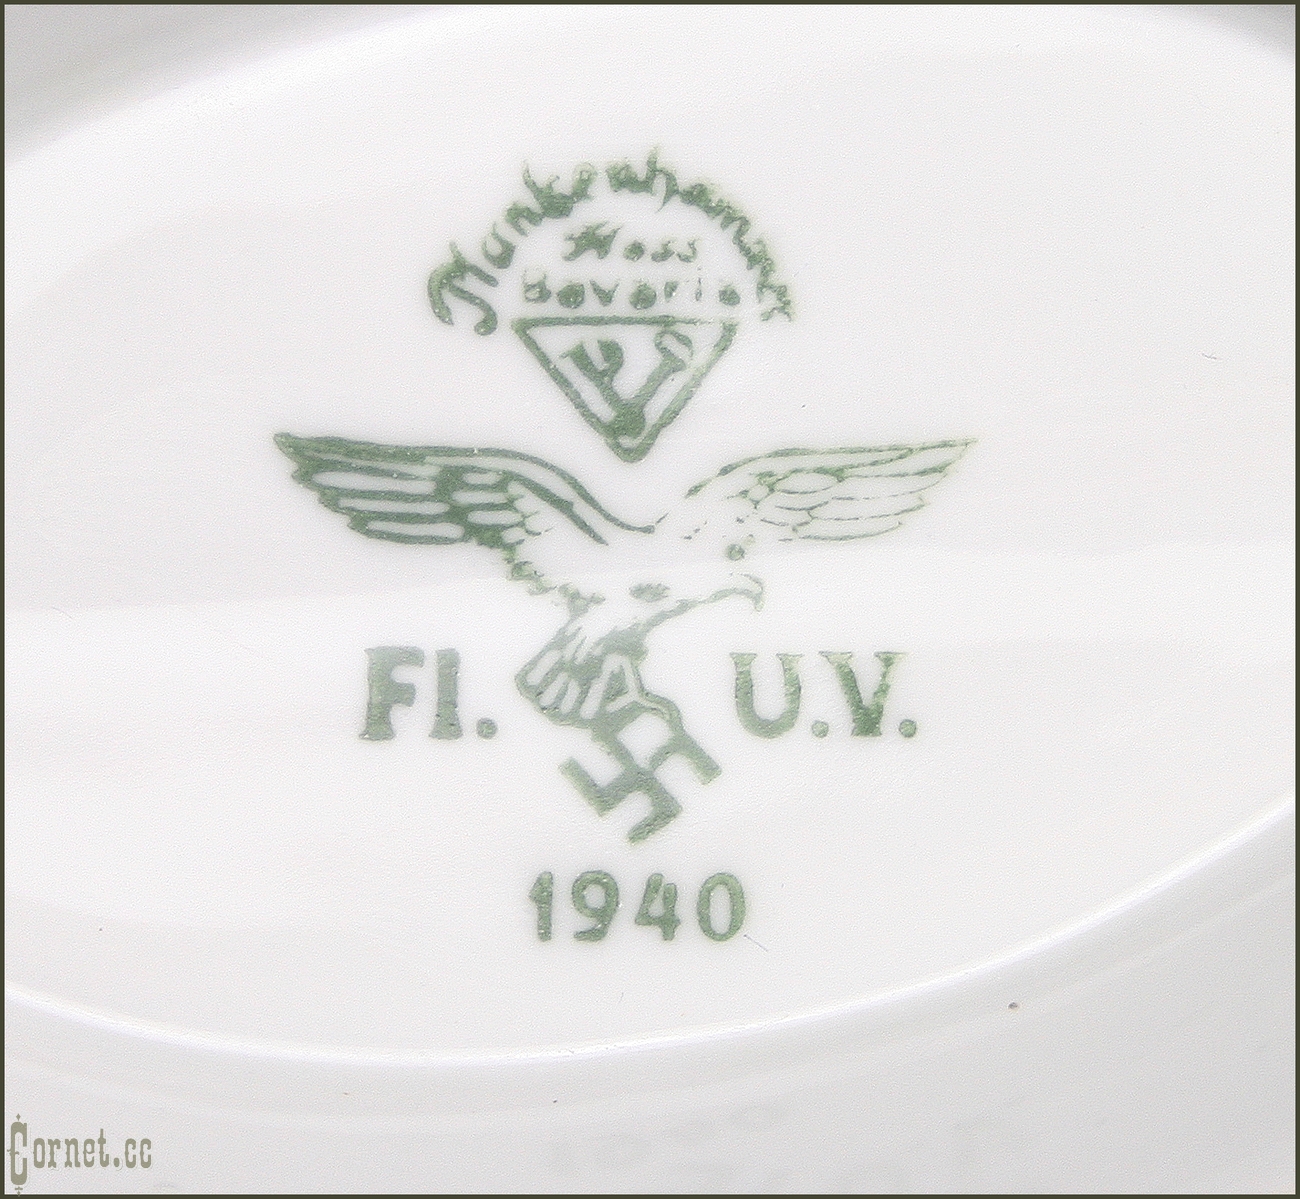 Luftwaffe sauce dishes